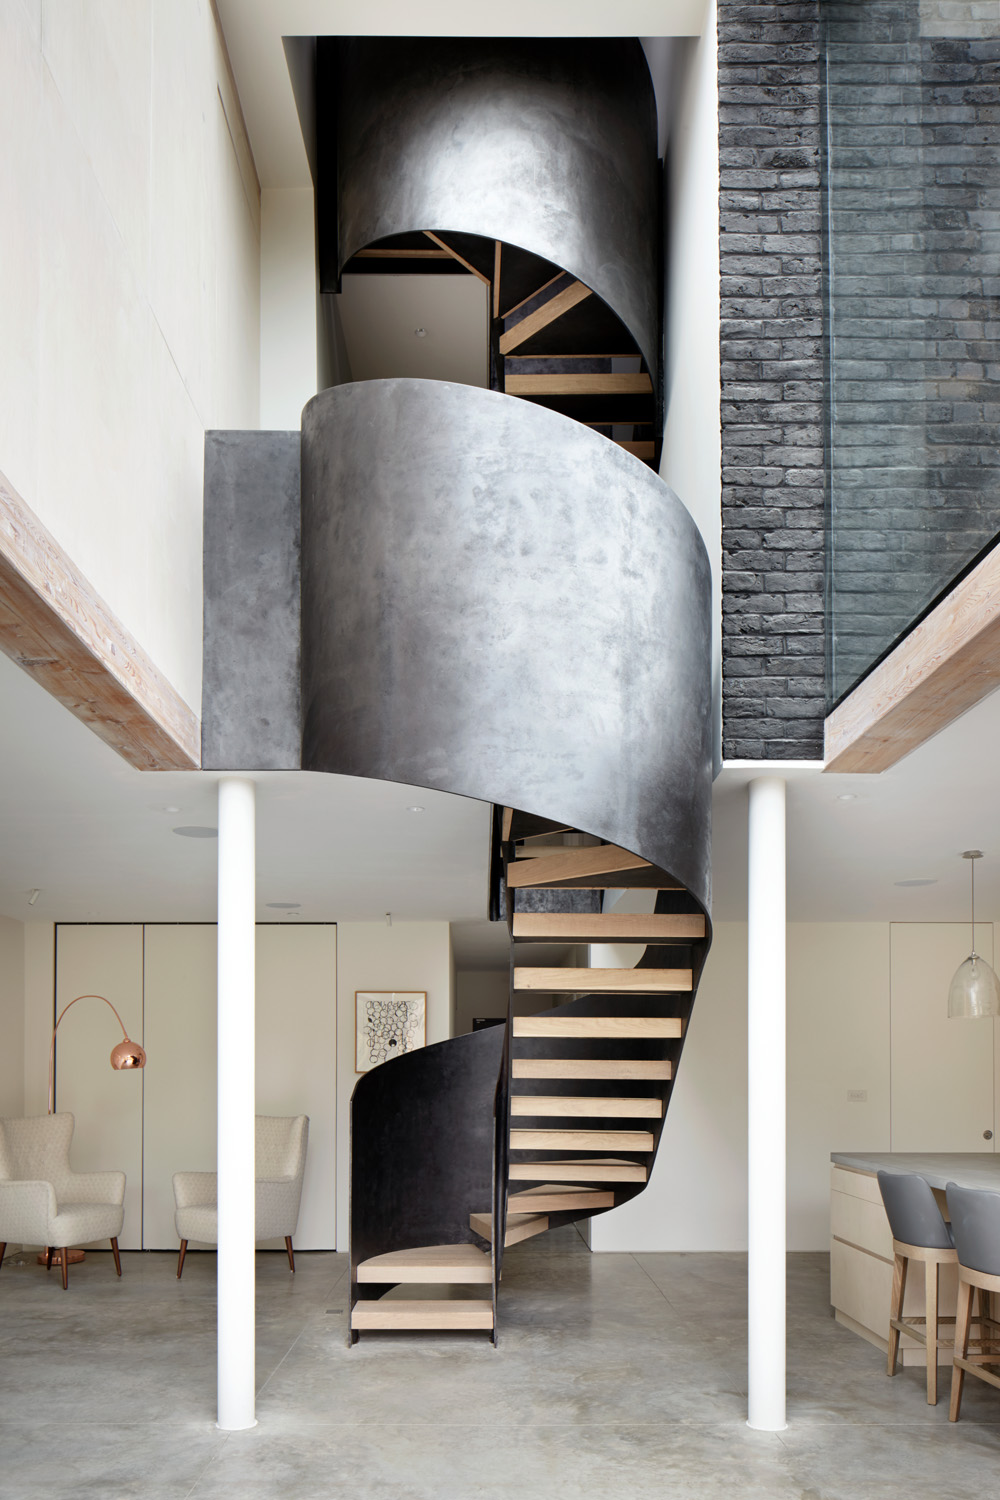 Stairs at De Beauvoir House by luxury architecture studio Cousins & Cousins